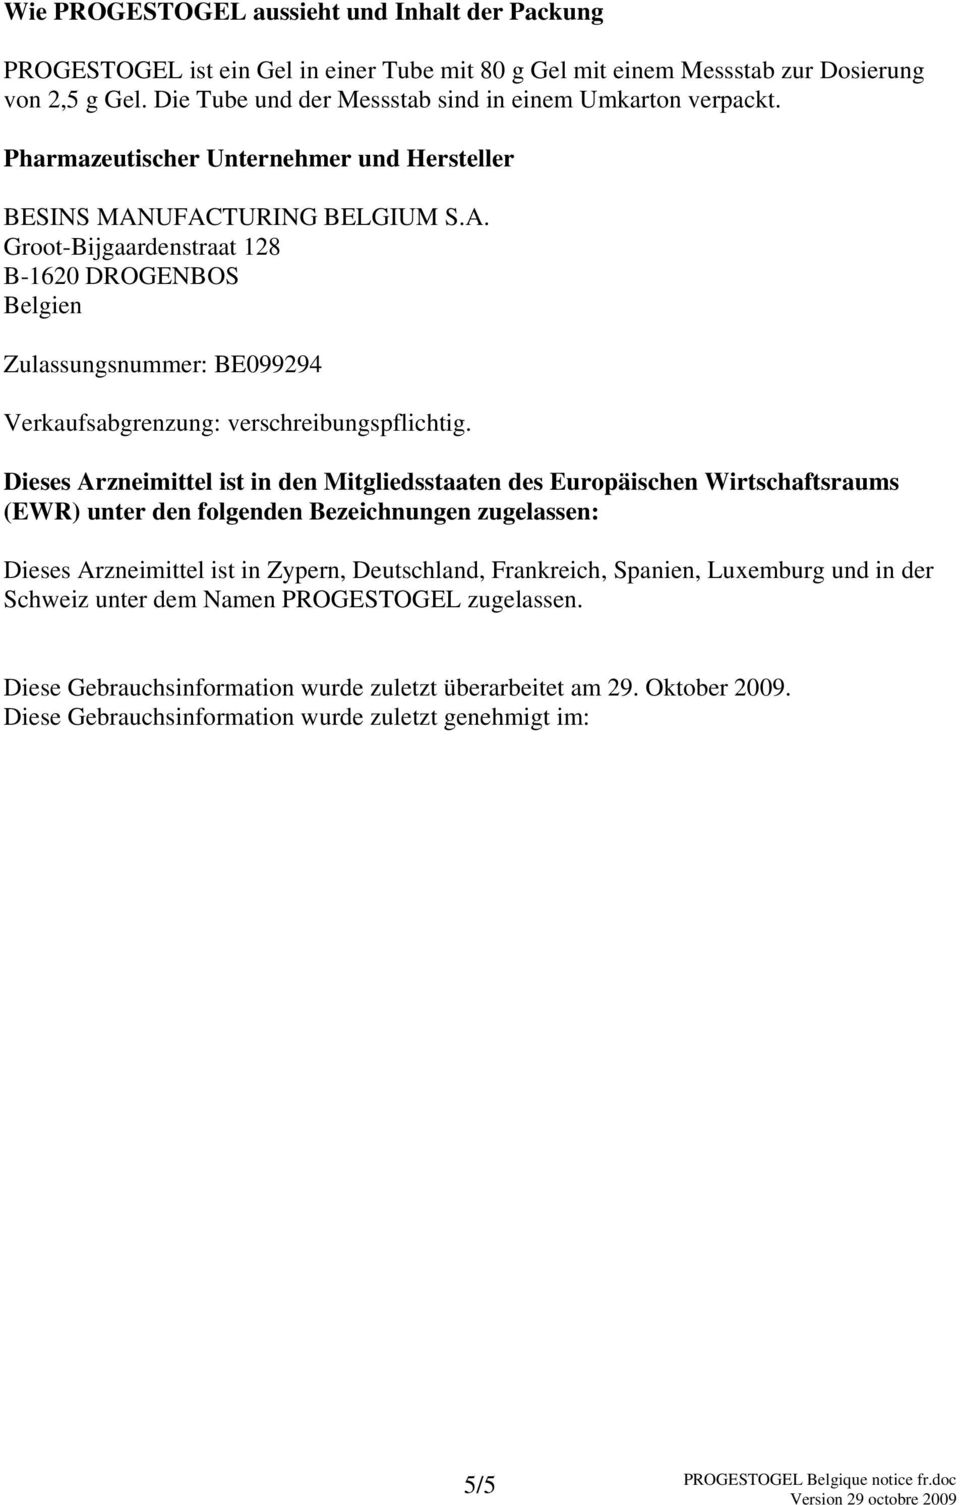 UFACTURING BELGIUM S.A. Groot-Bijgaardenstraat 128 B-1620 DROGENBOS Belgien Zulassungsnummer: BE099294 Verkaufsabgrenzung: verschreibungspflichtig.